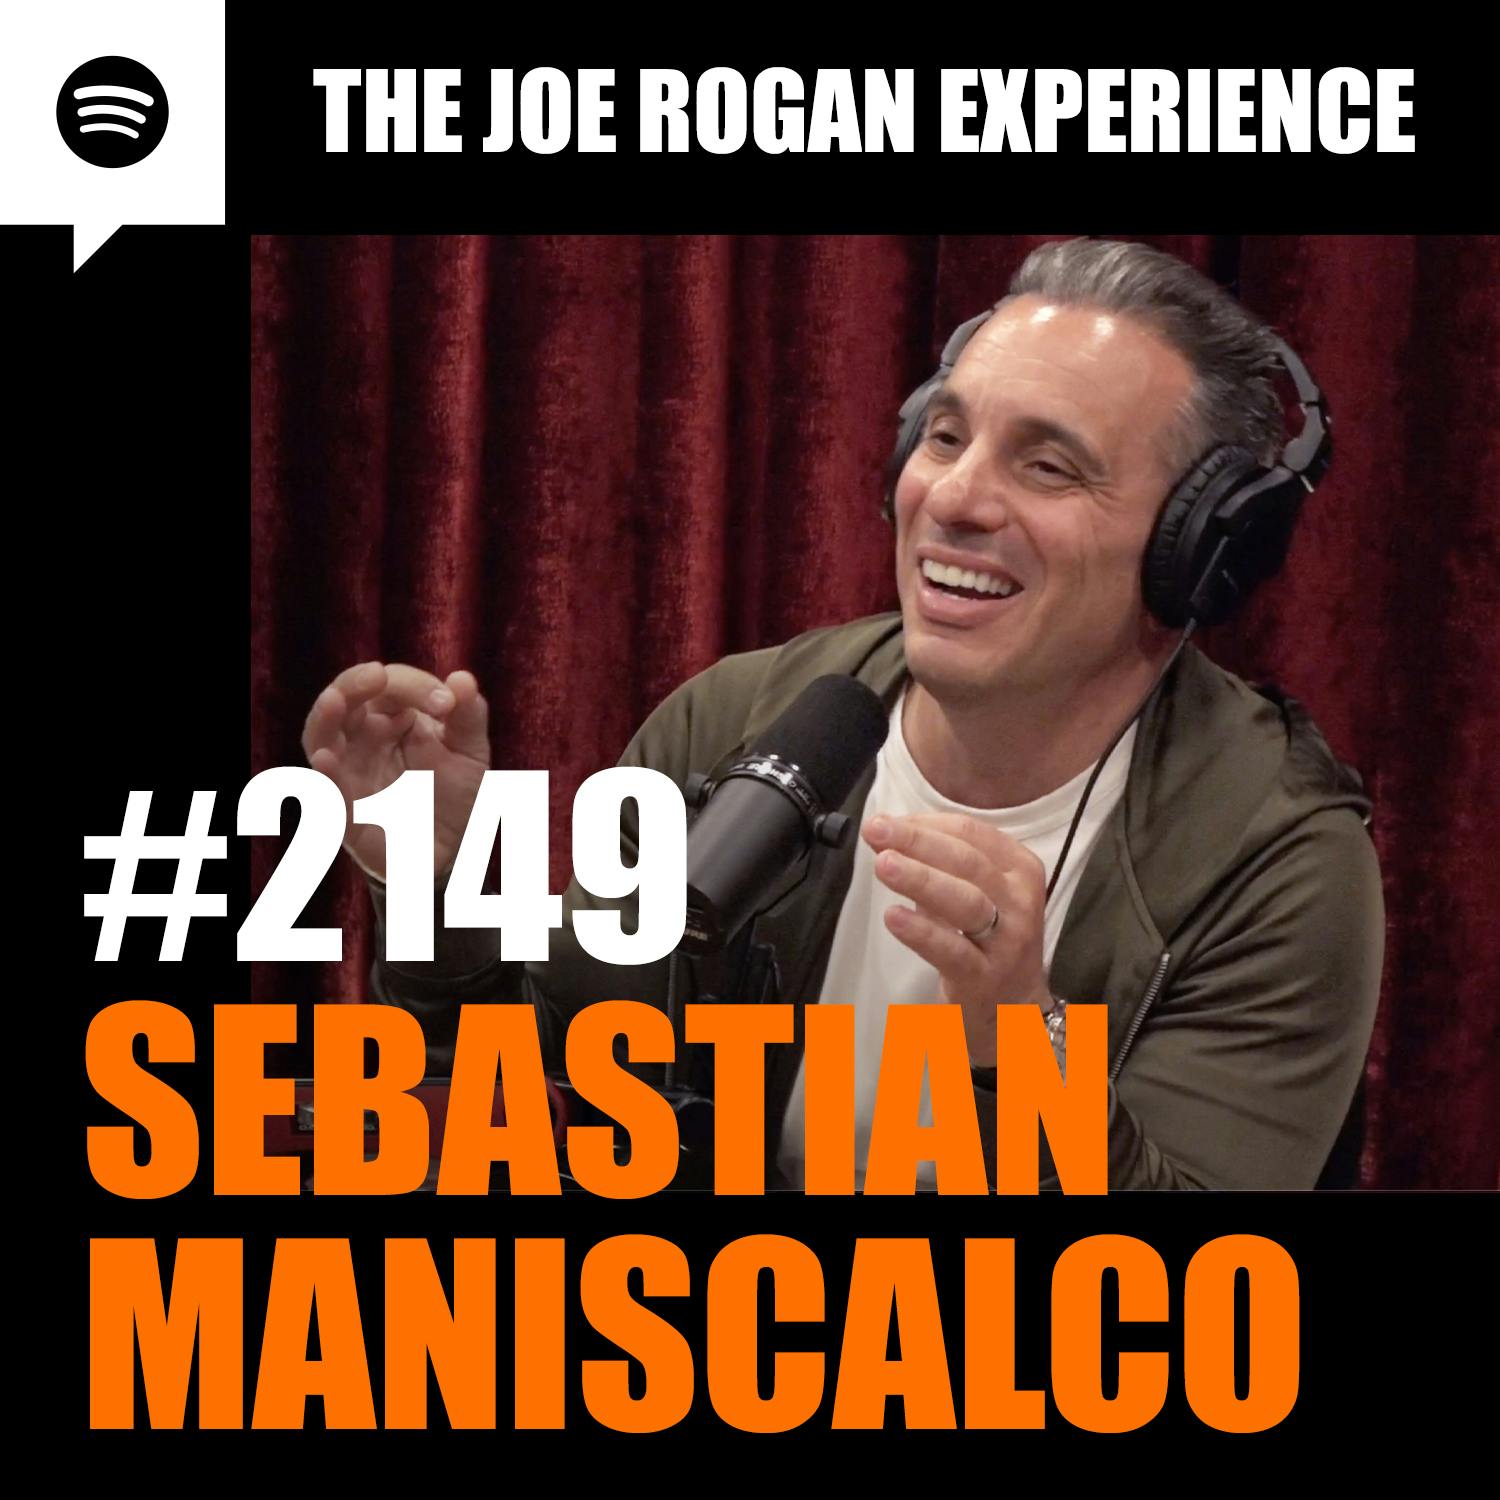 #2149 - Sebastian Maniscalco